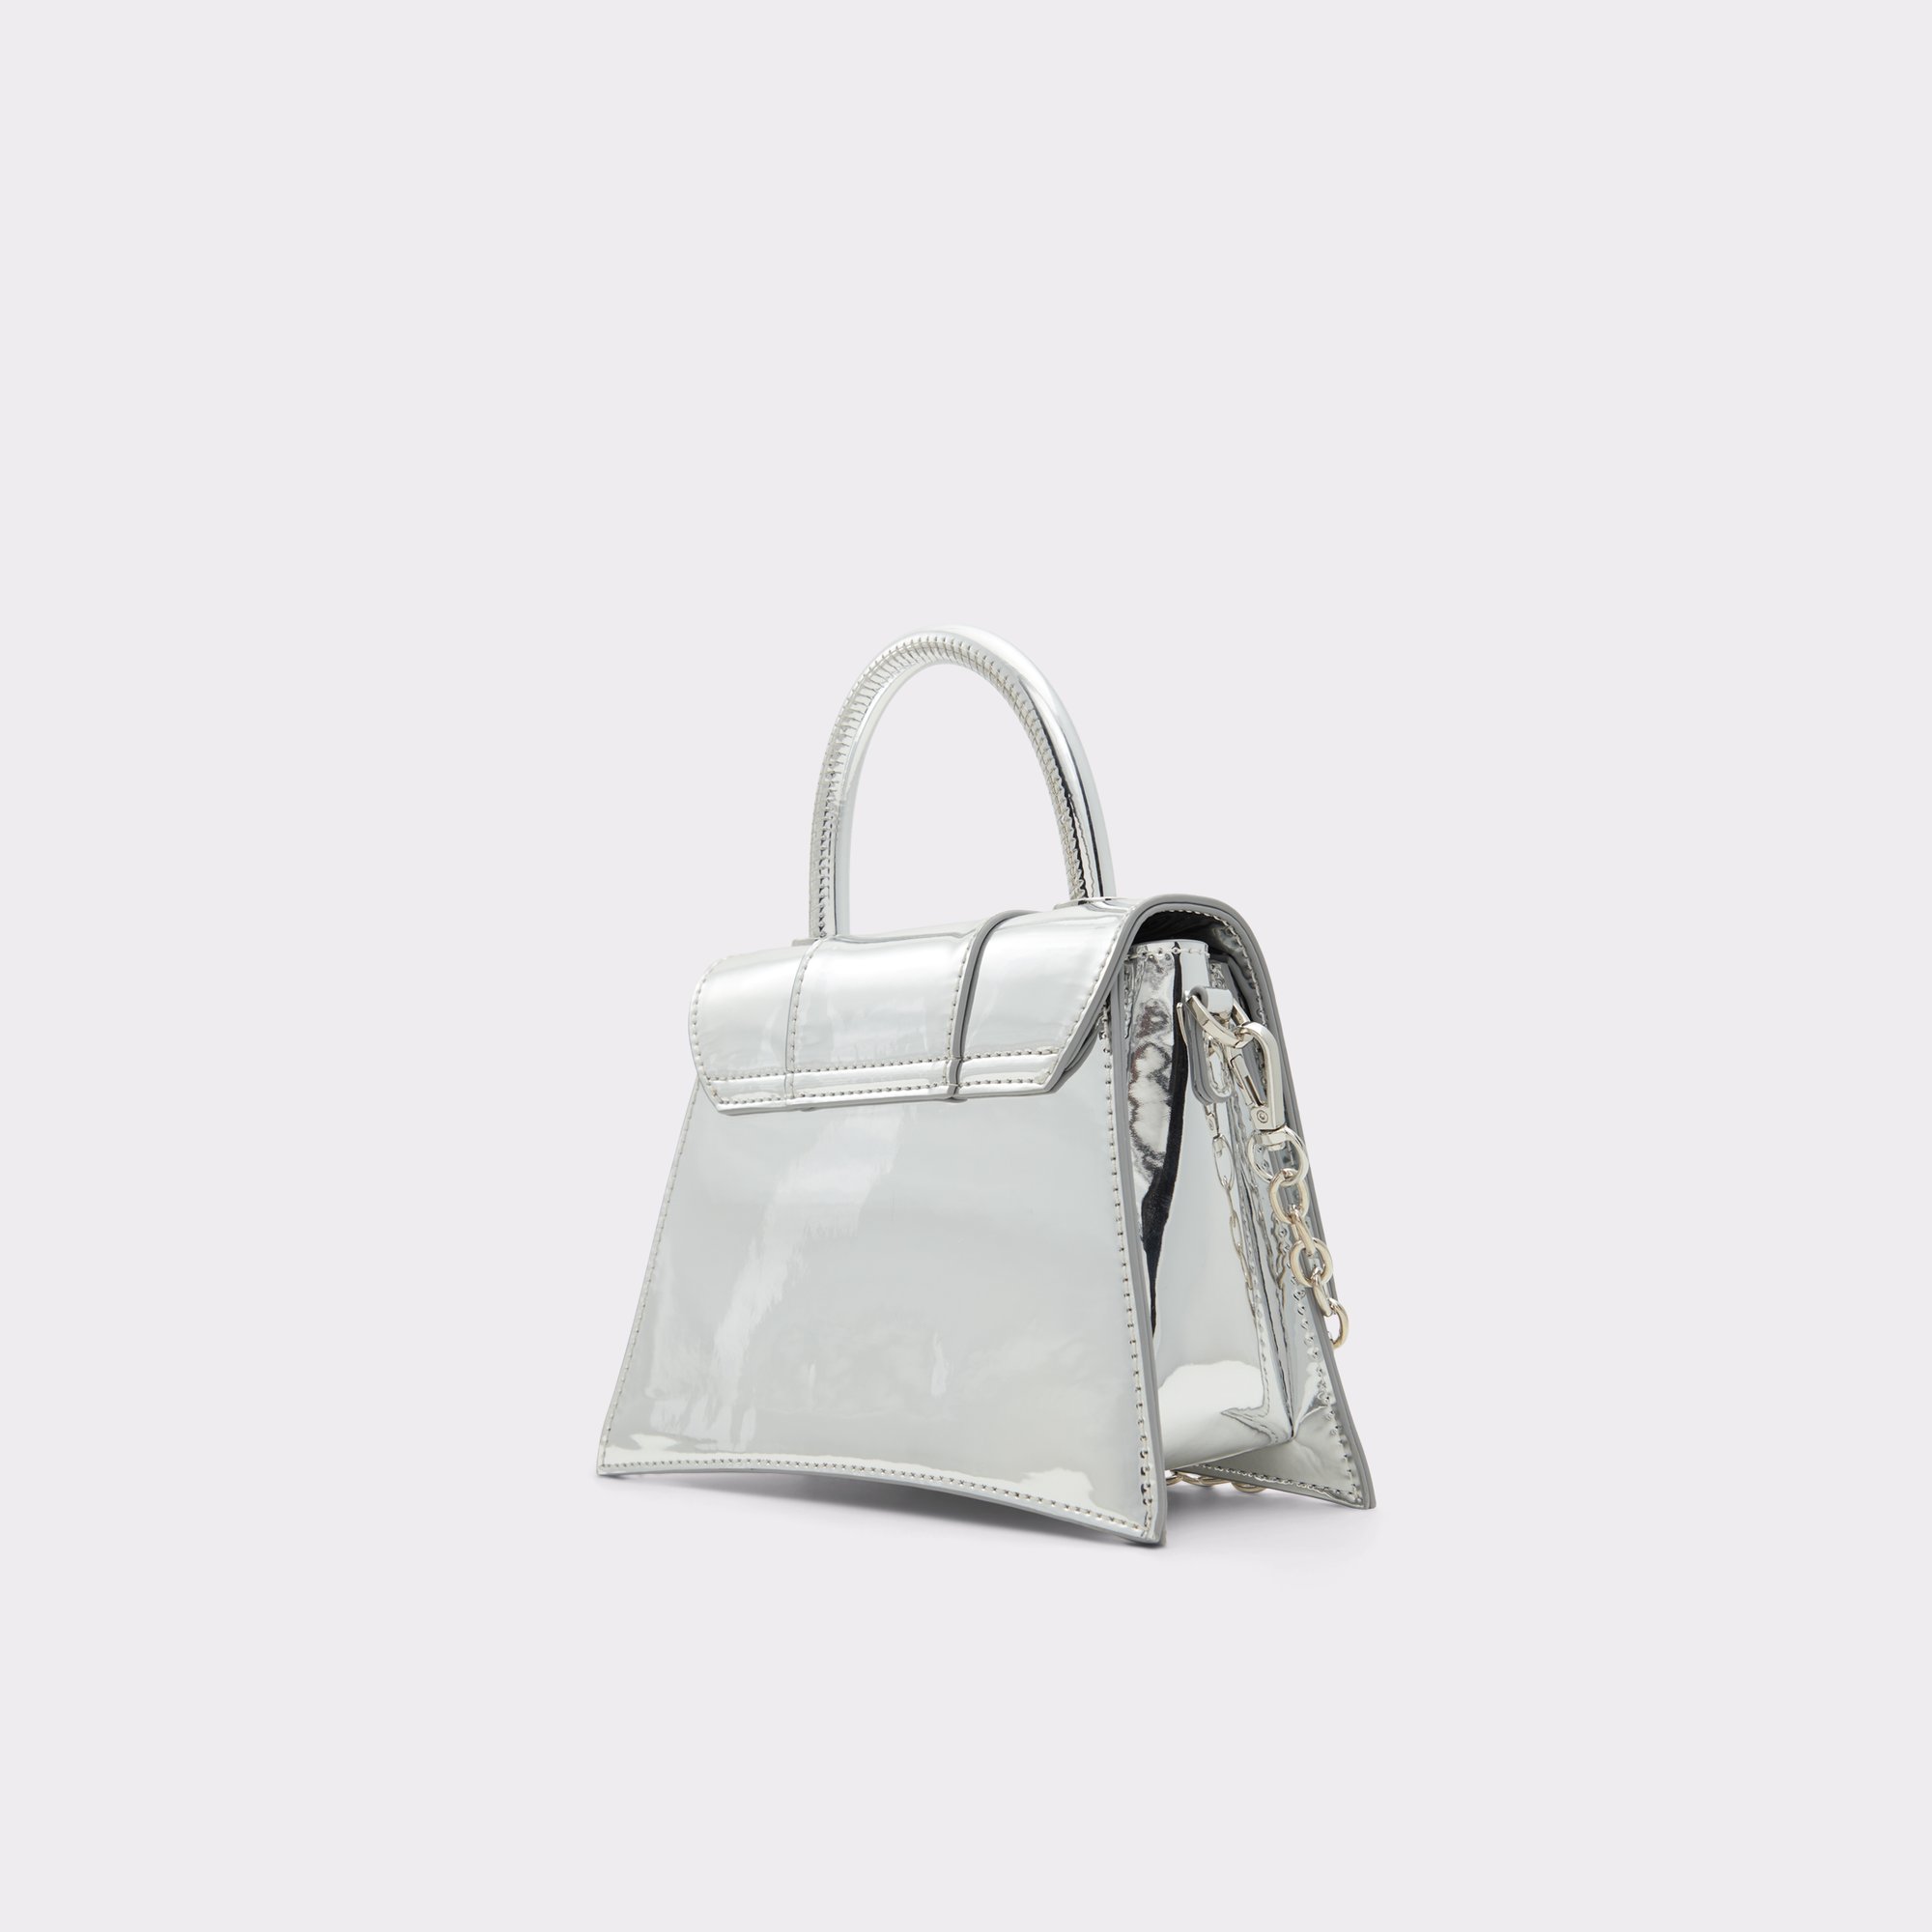 Kindraax Silver Women's Top Handle Bags | ALDO US